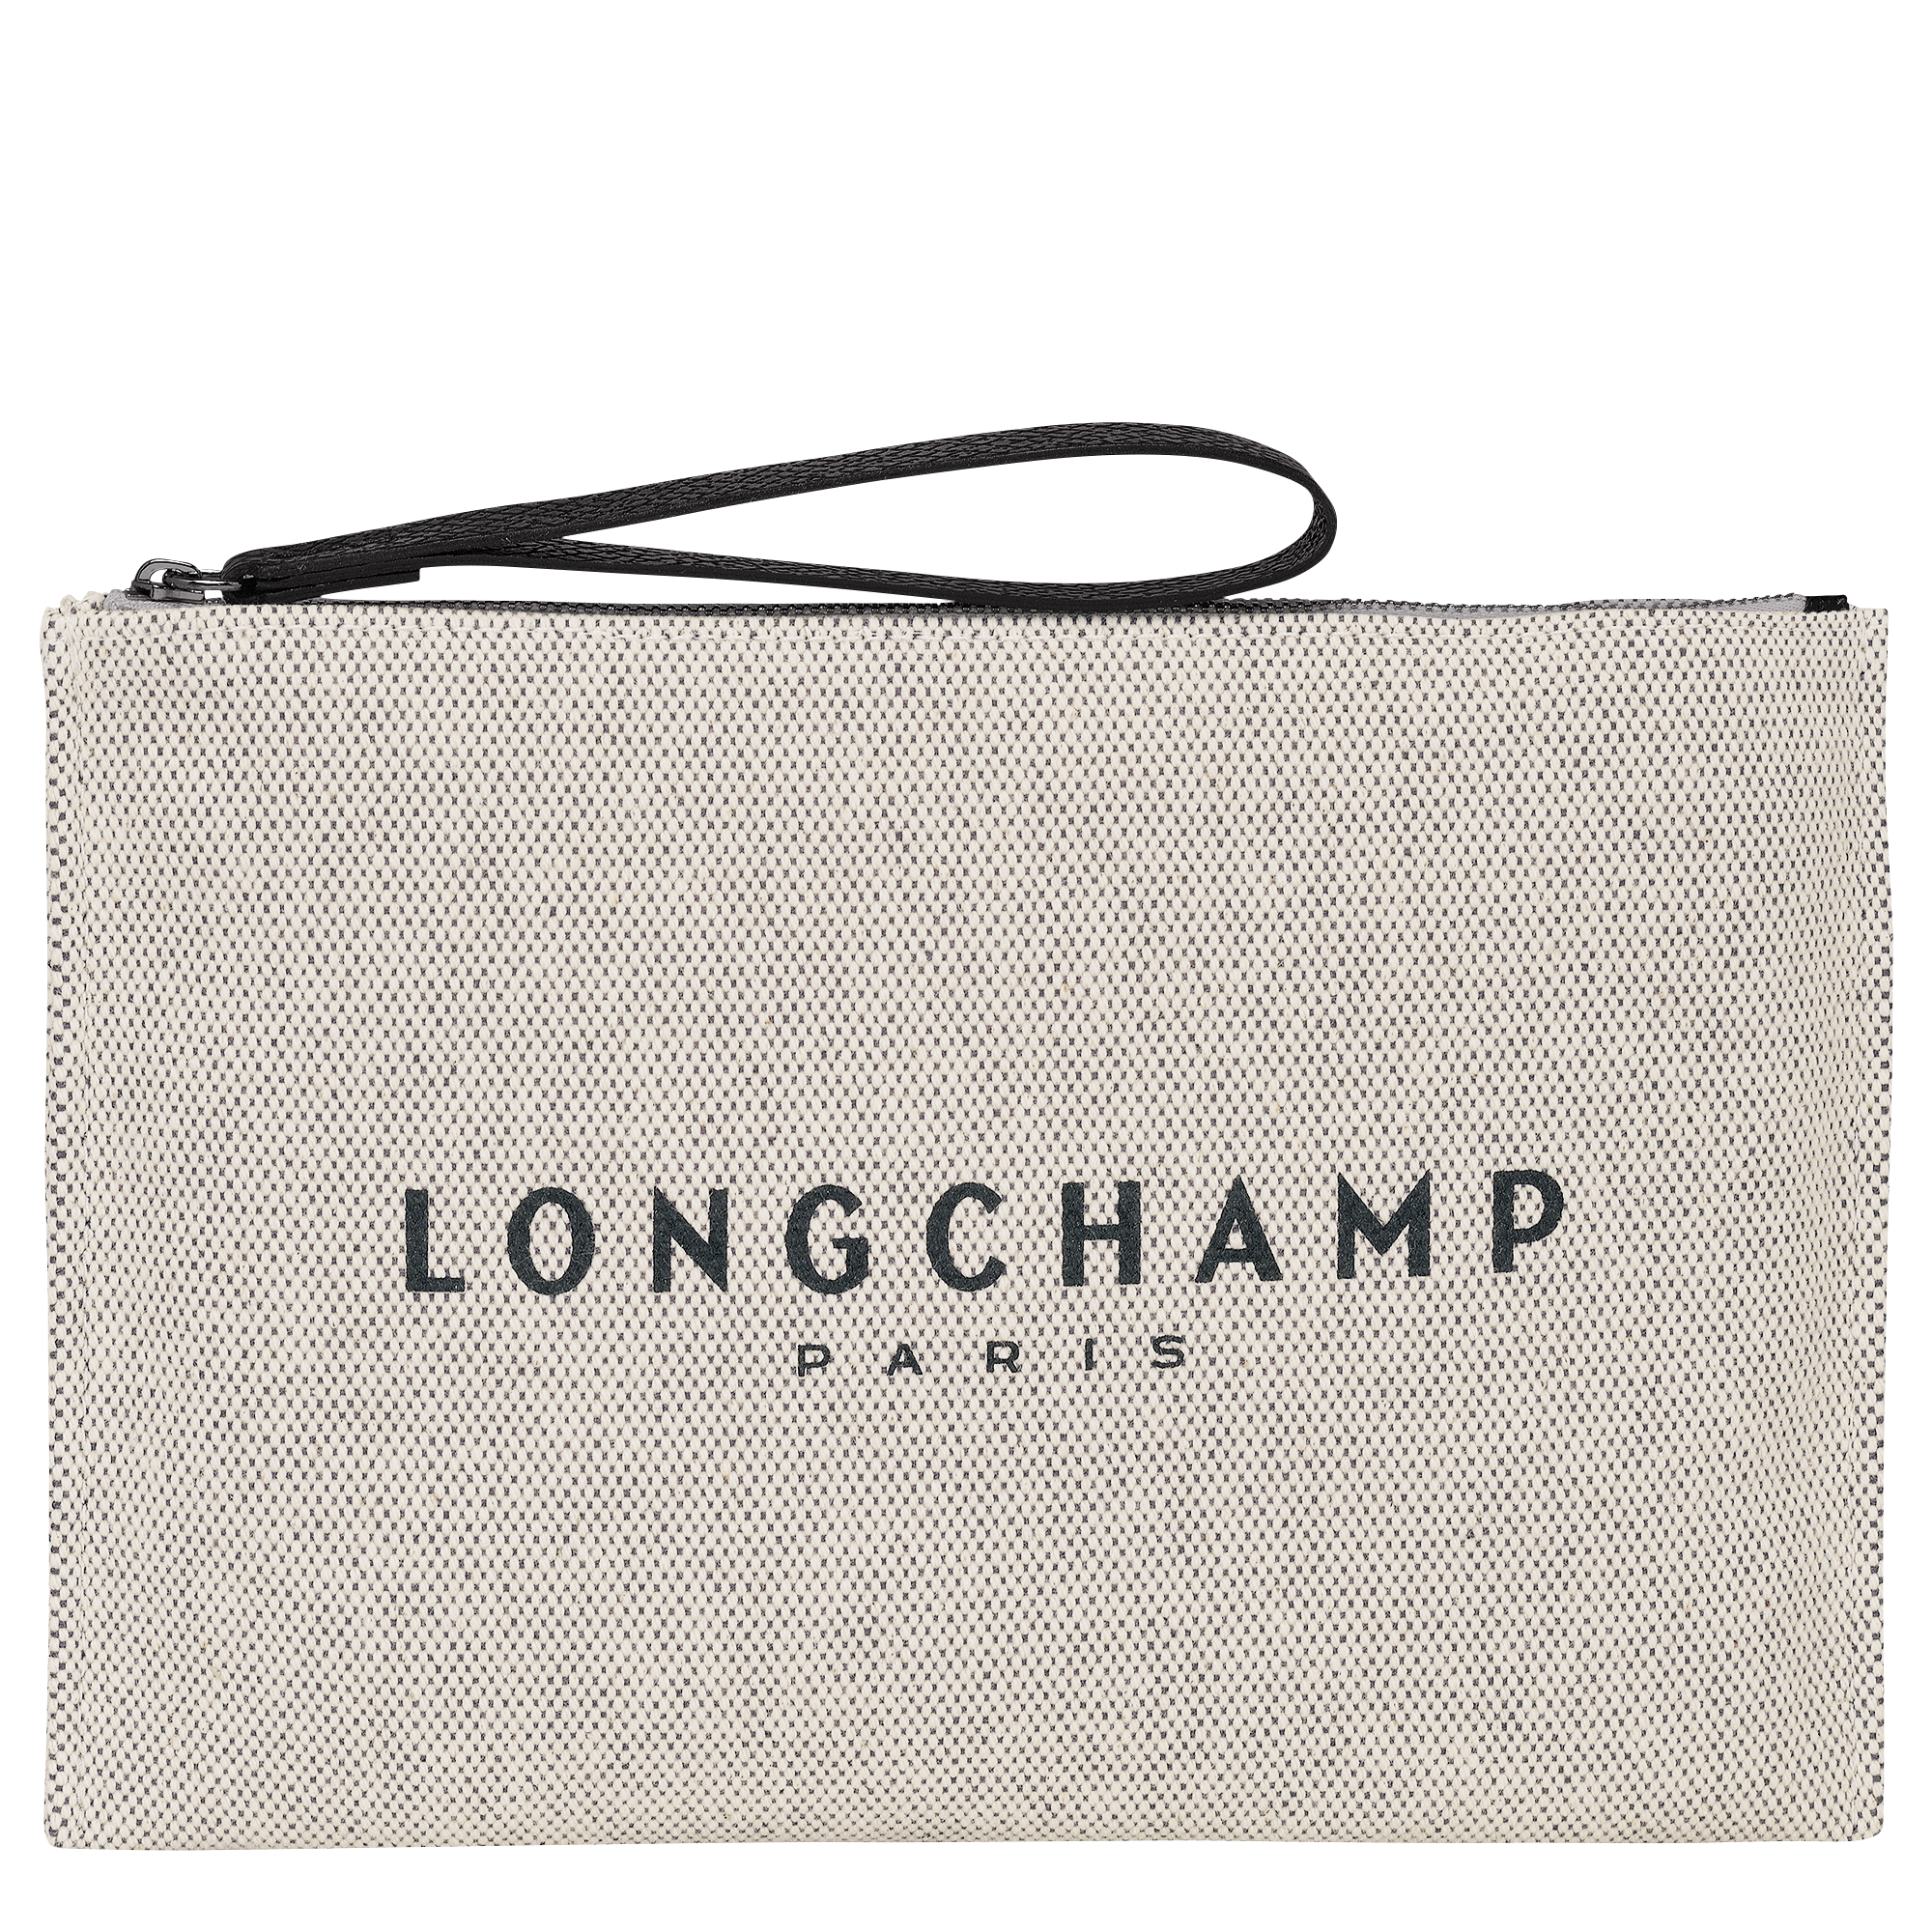 longchamp pouch